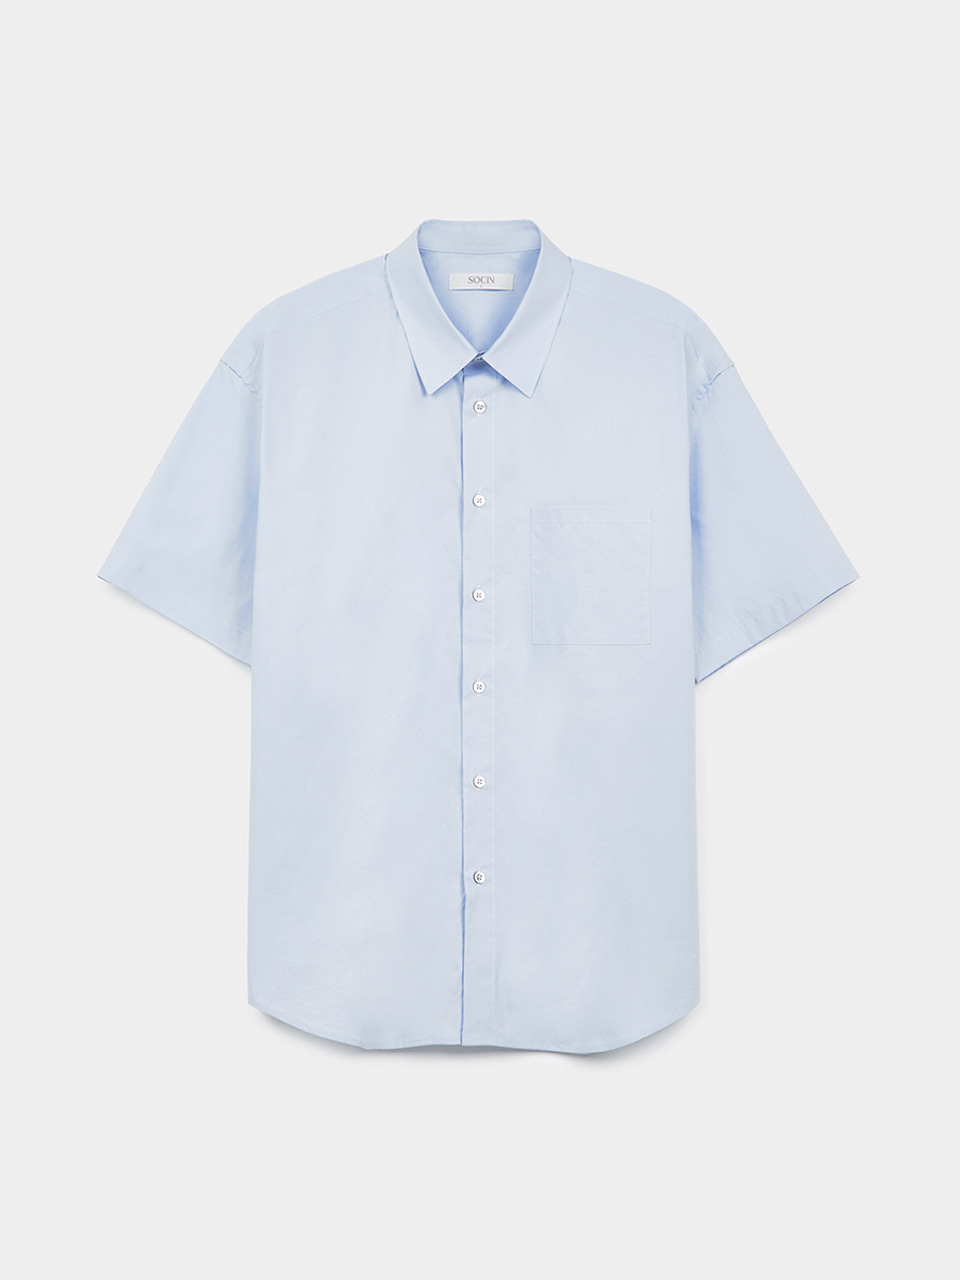 Washer Cotton Half Shirts (Sky Blue)